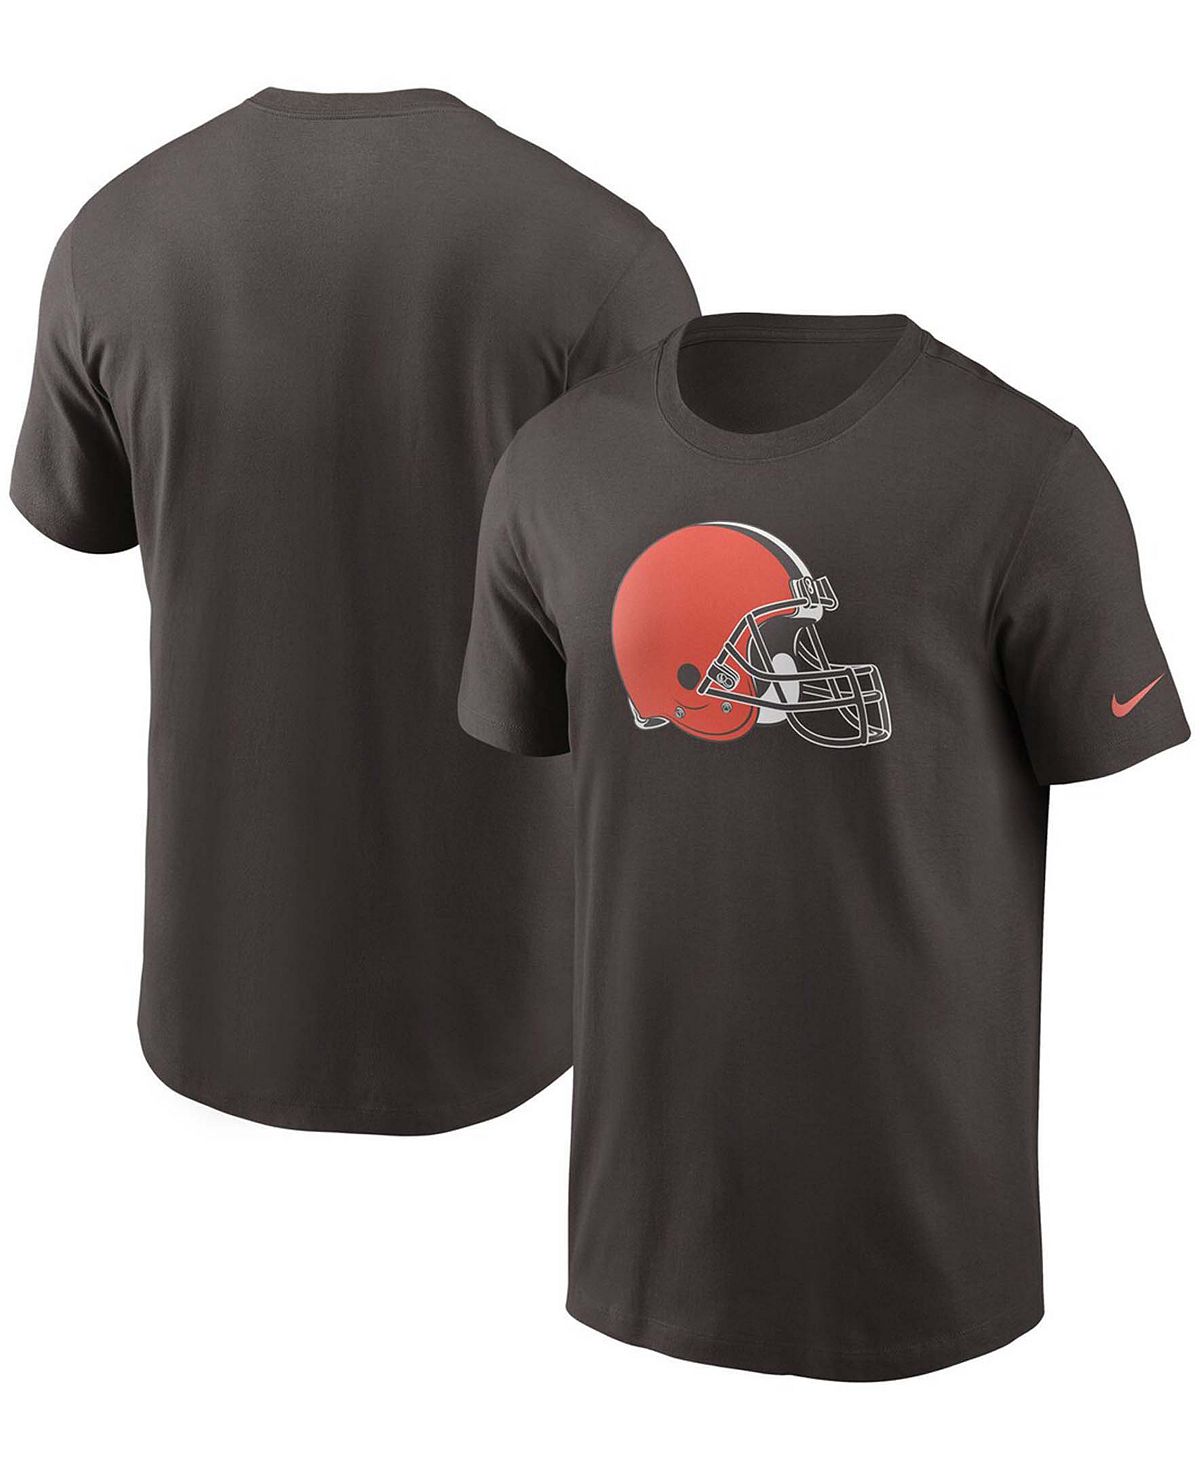 Мужская коричневая футболка с логотипом Cleveland Browns Primary Nike